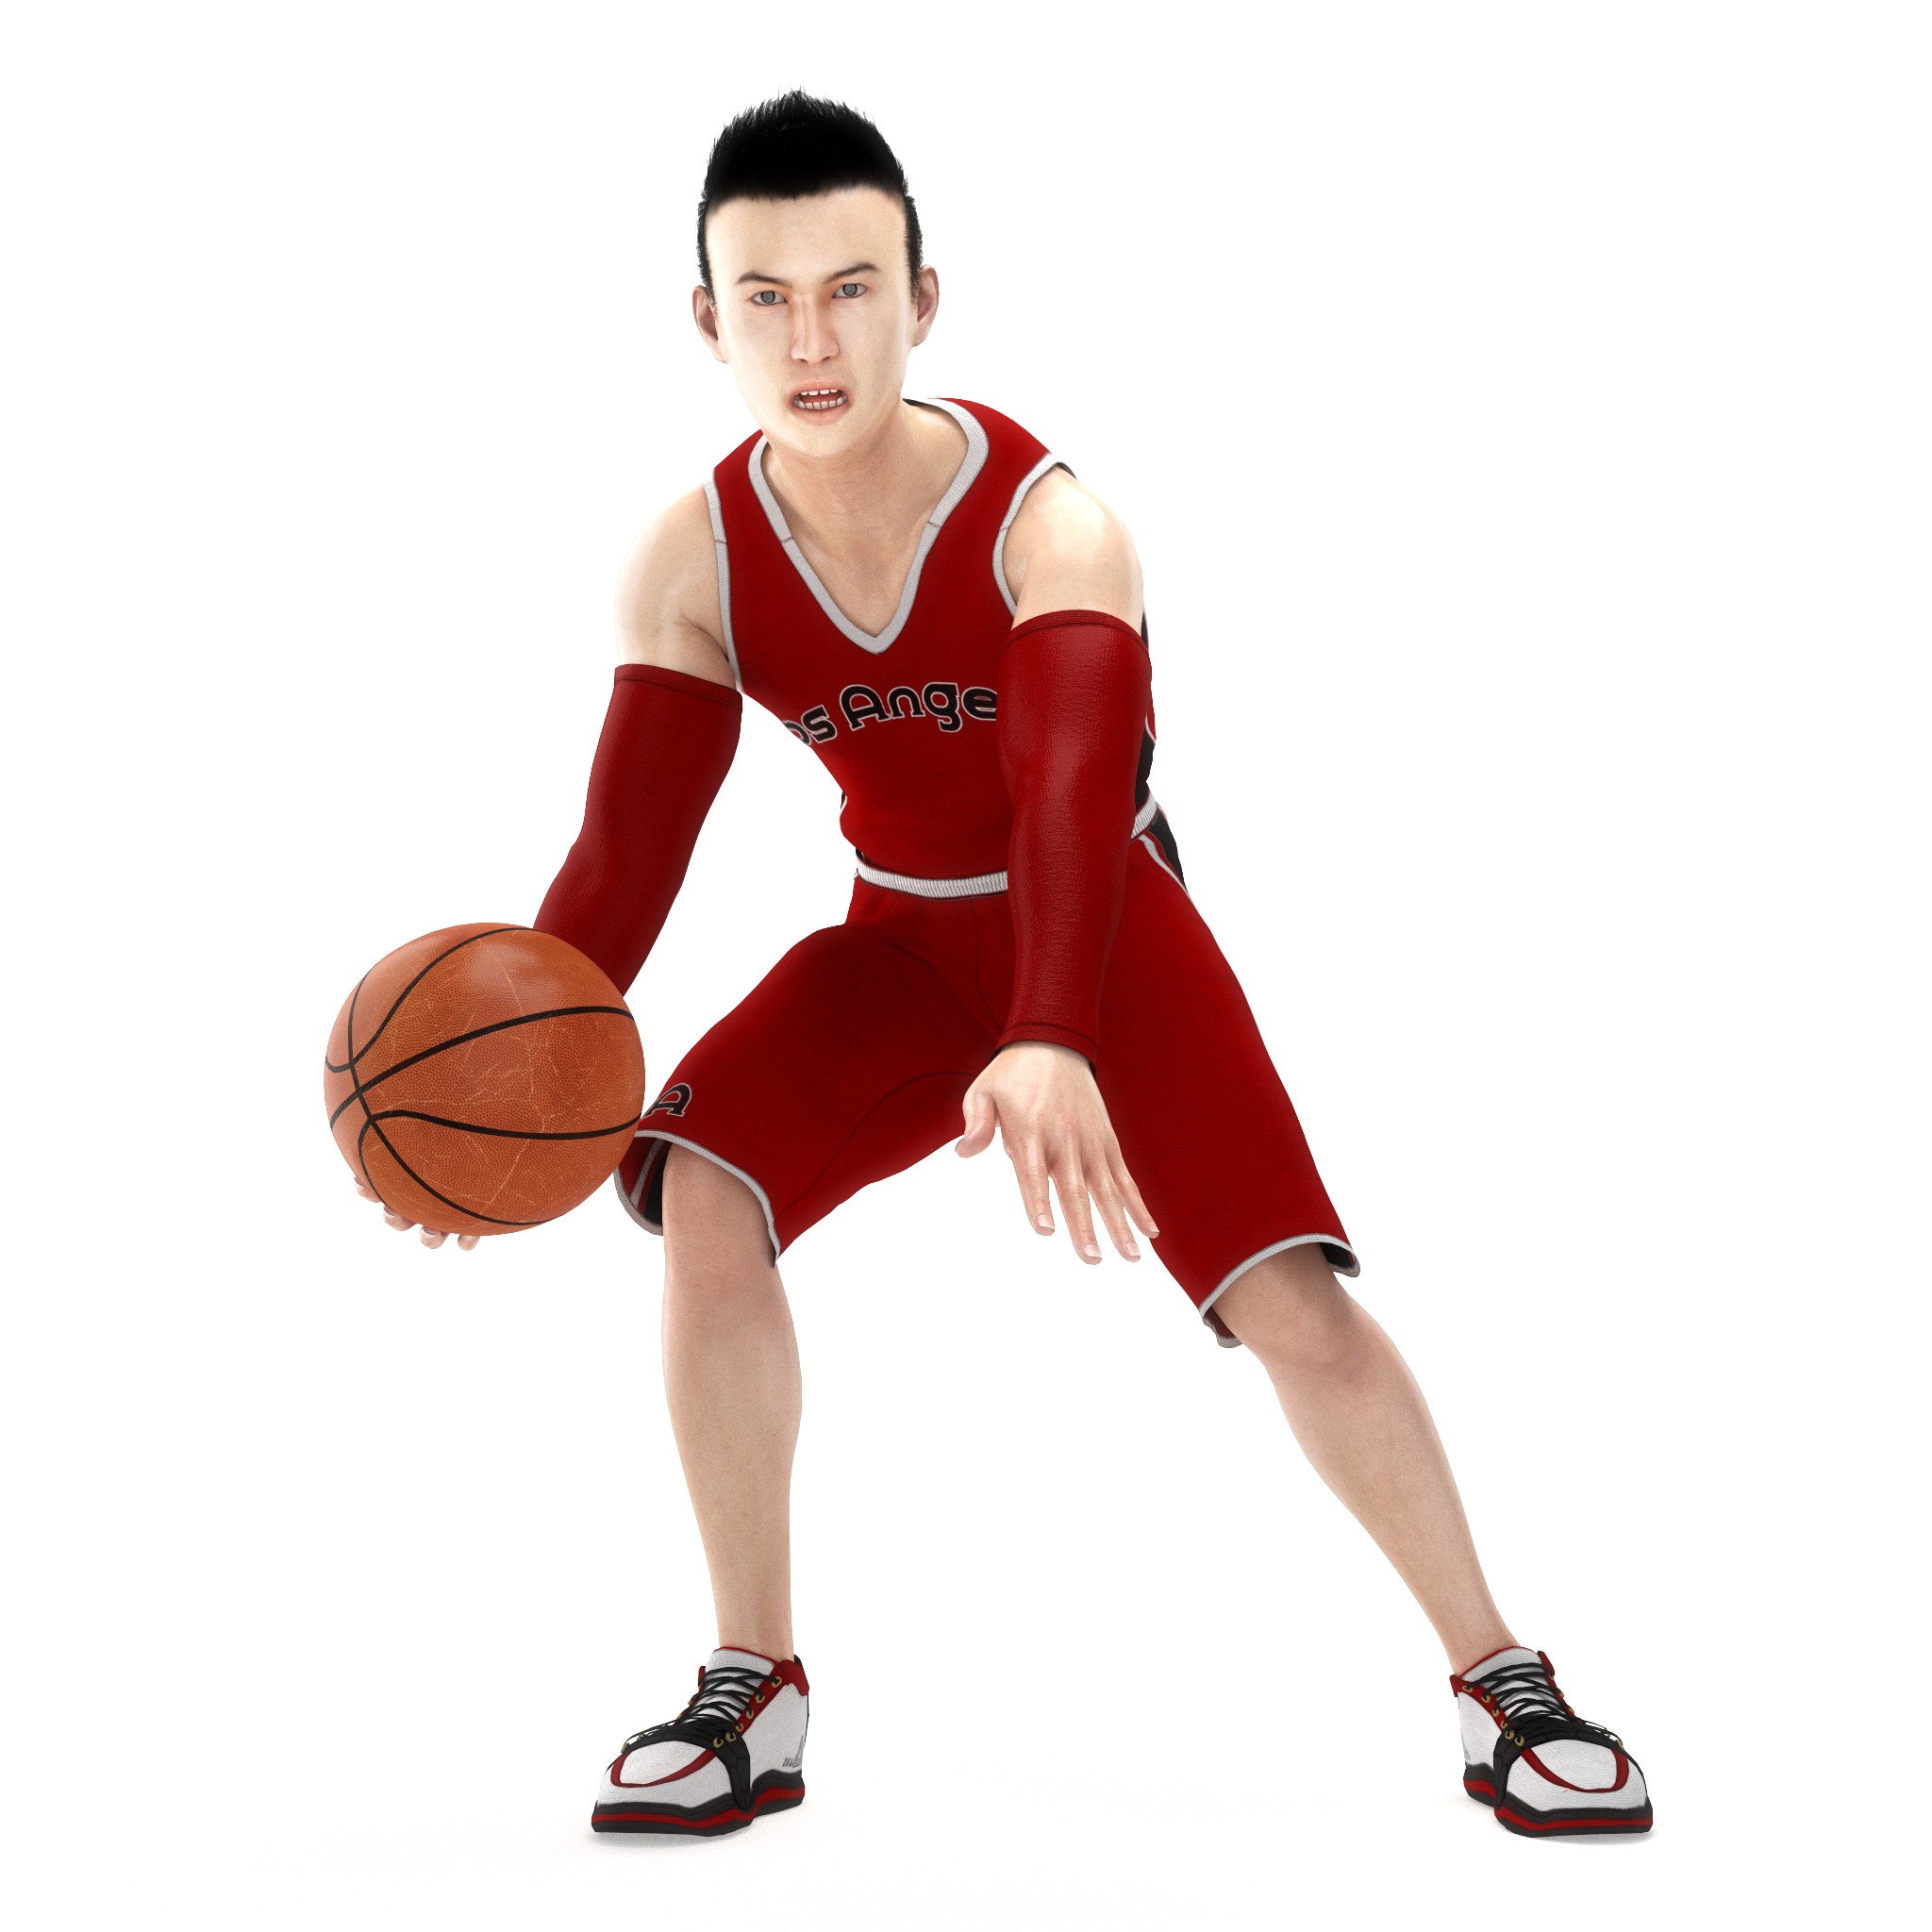 BasketballBoy_pose1.jpg